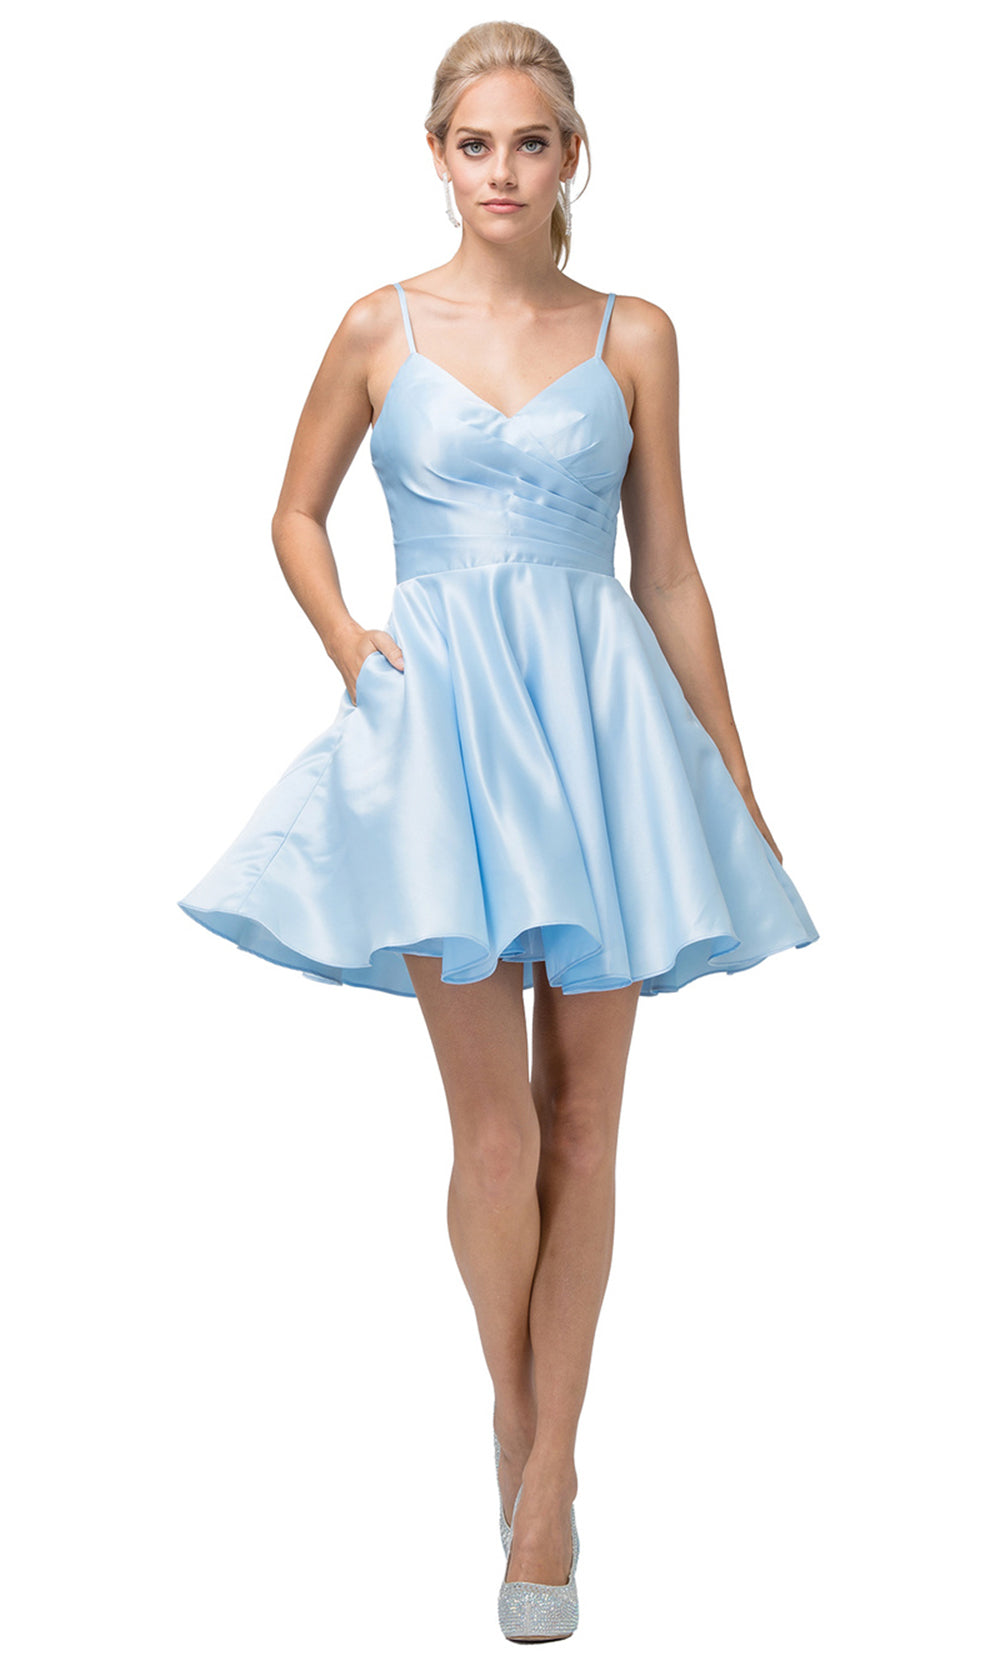 Sweet Jenny II Dress In Bluegrade 8 grad dresses, graduation dresses